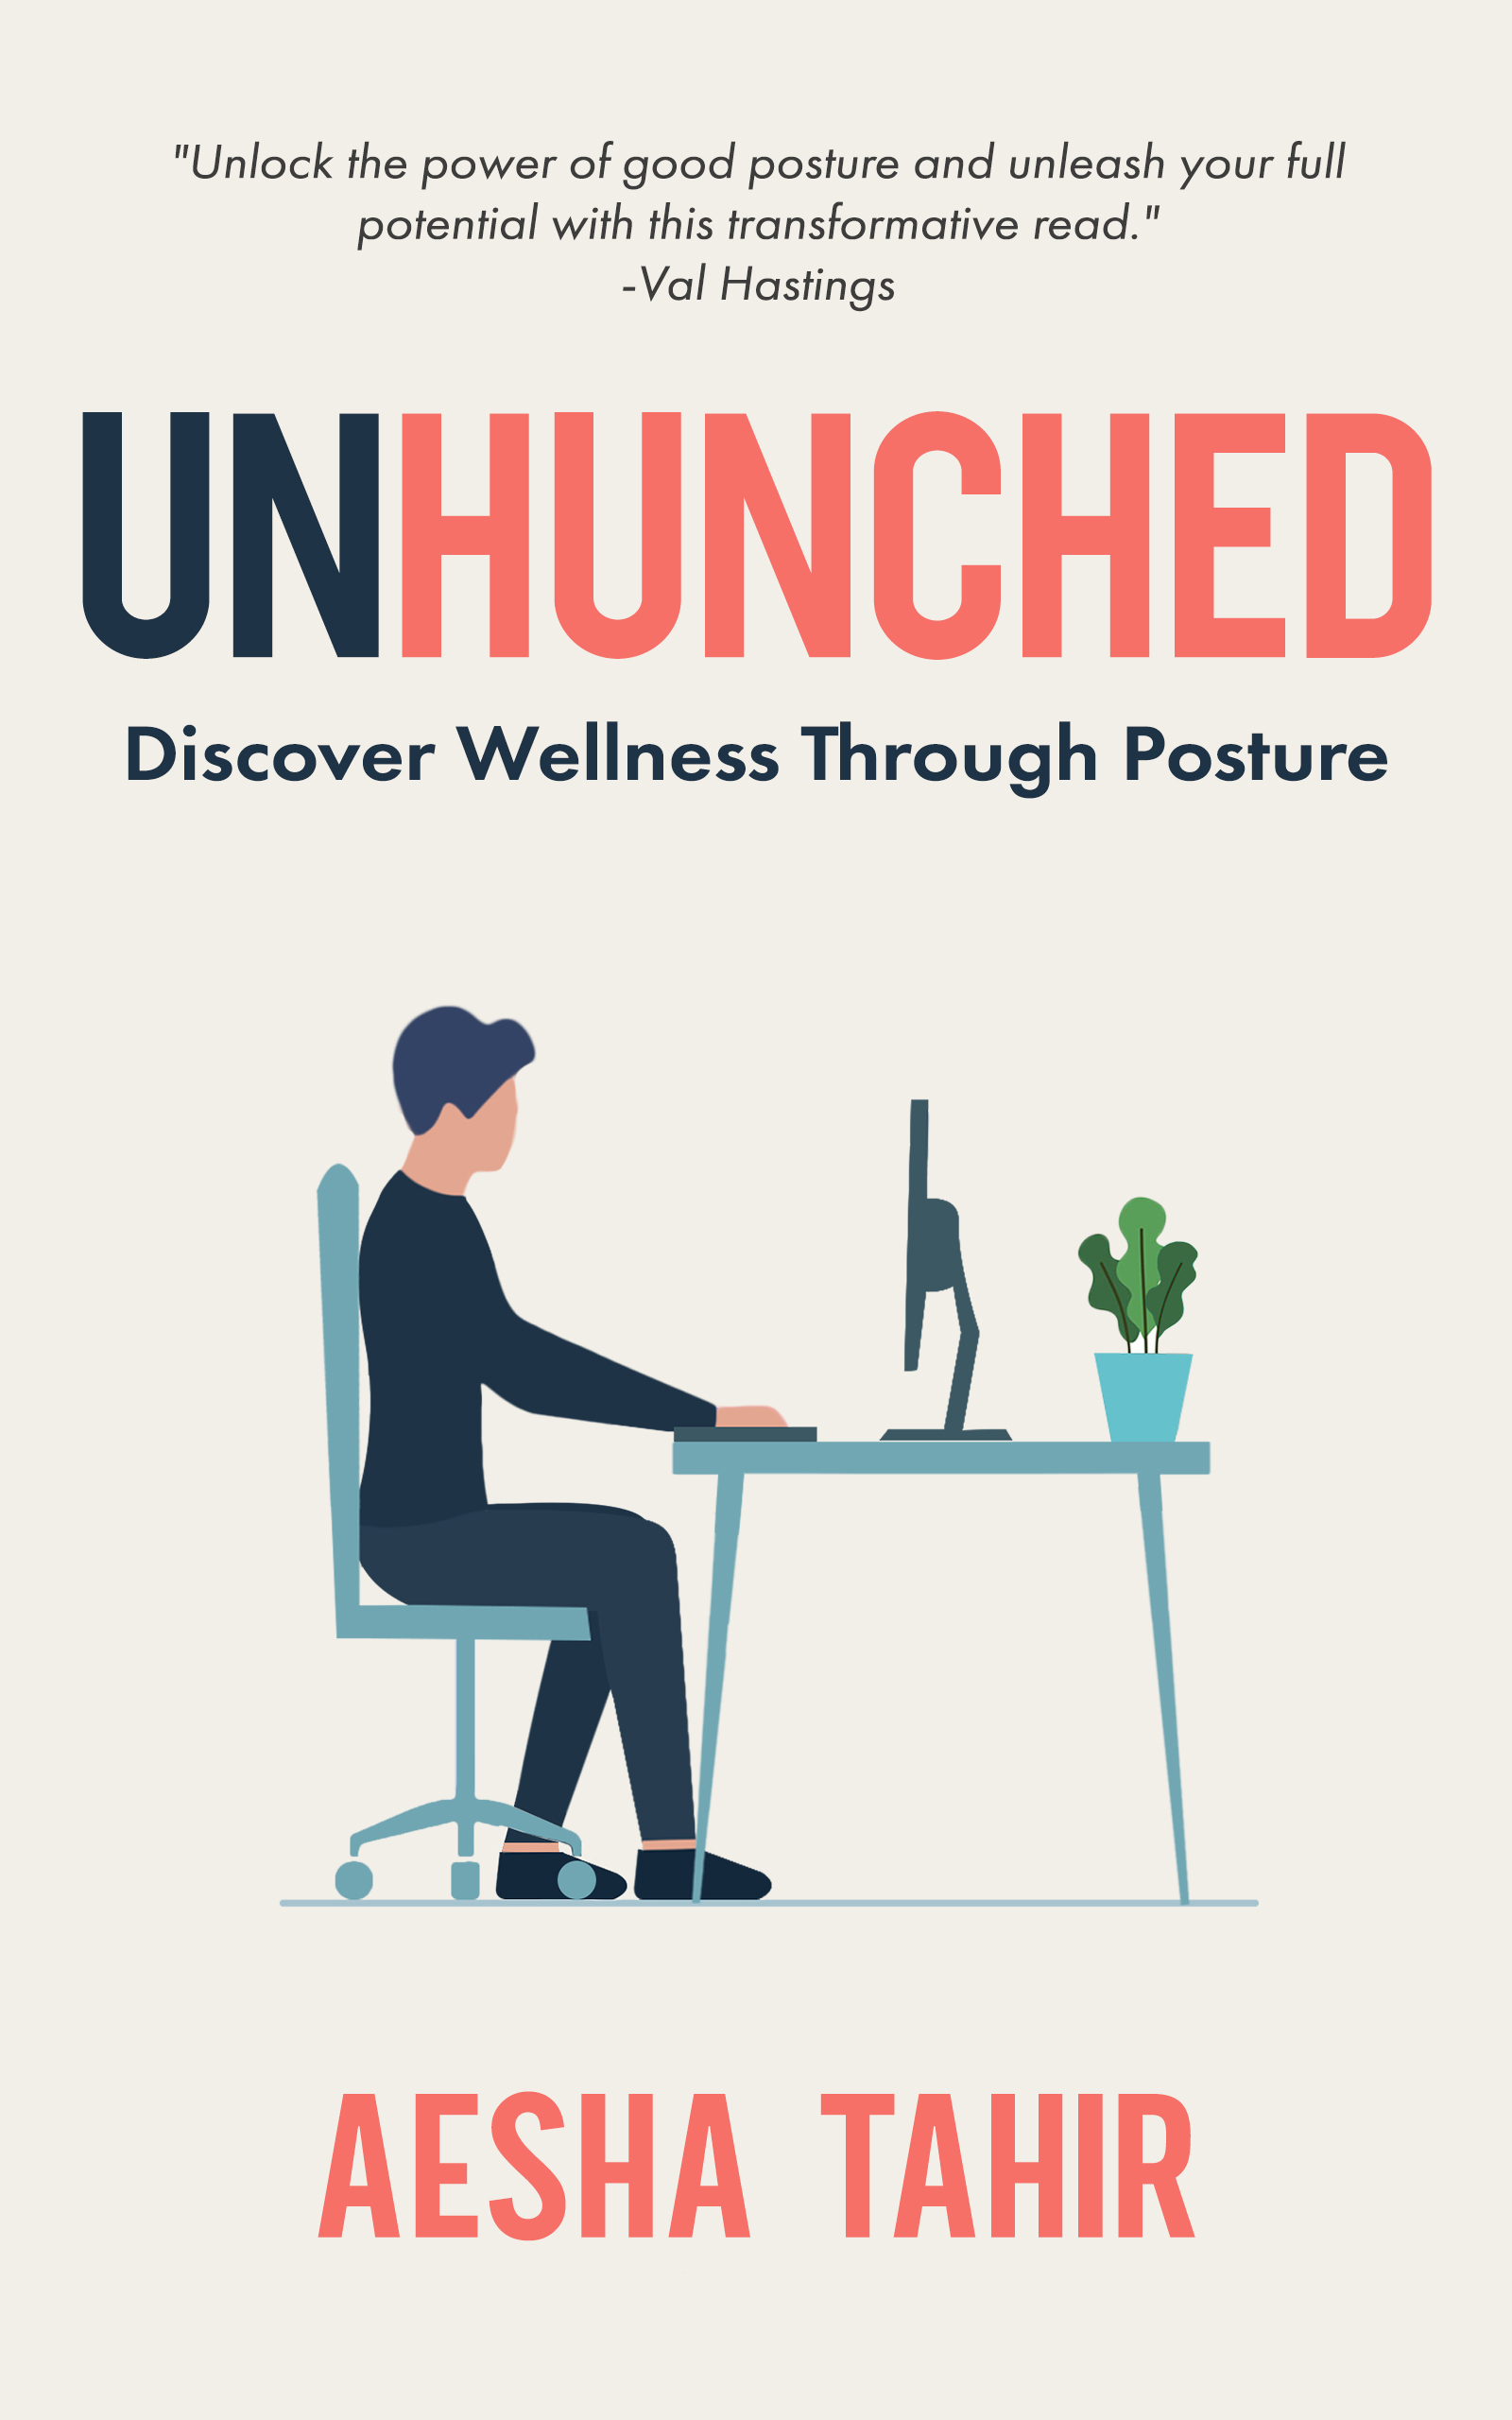 posture book cover